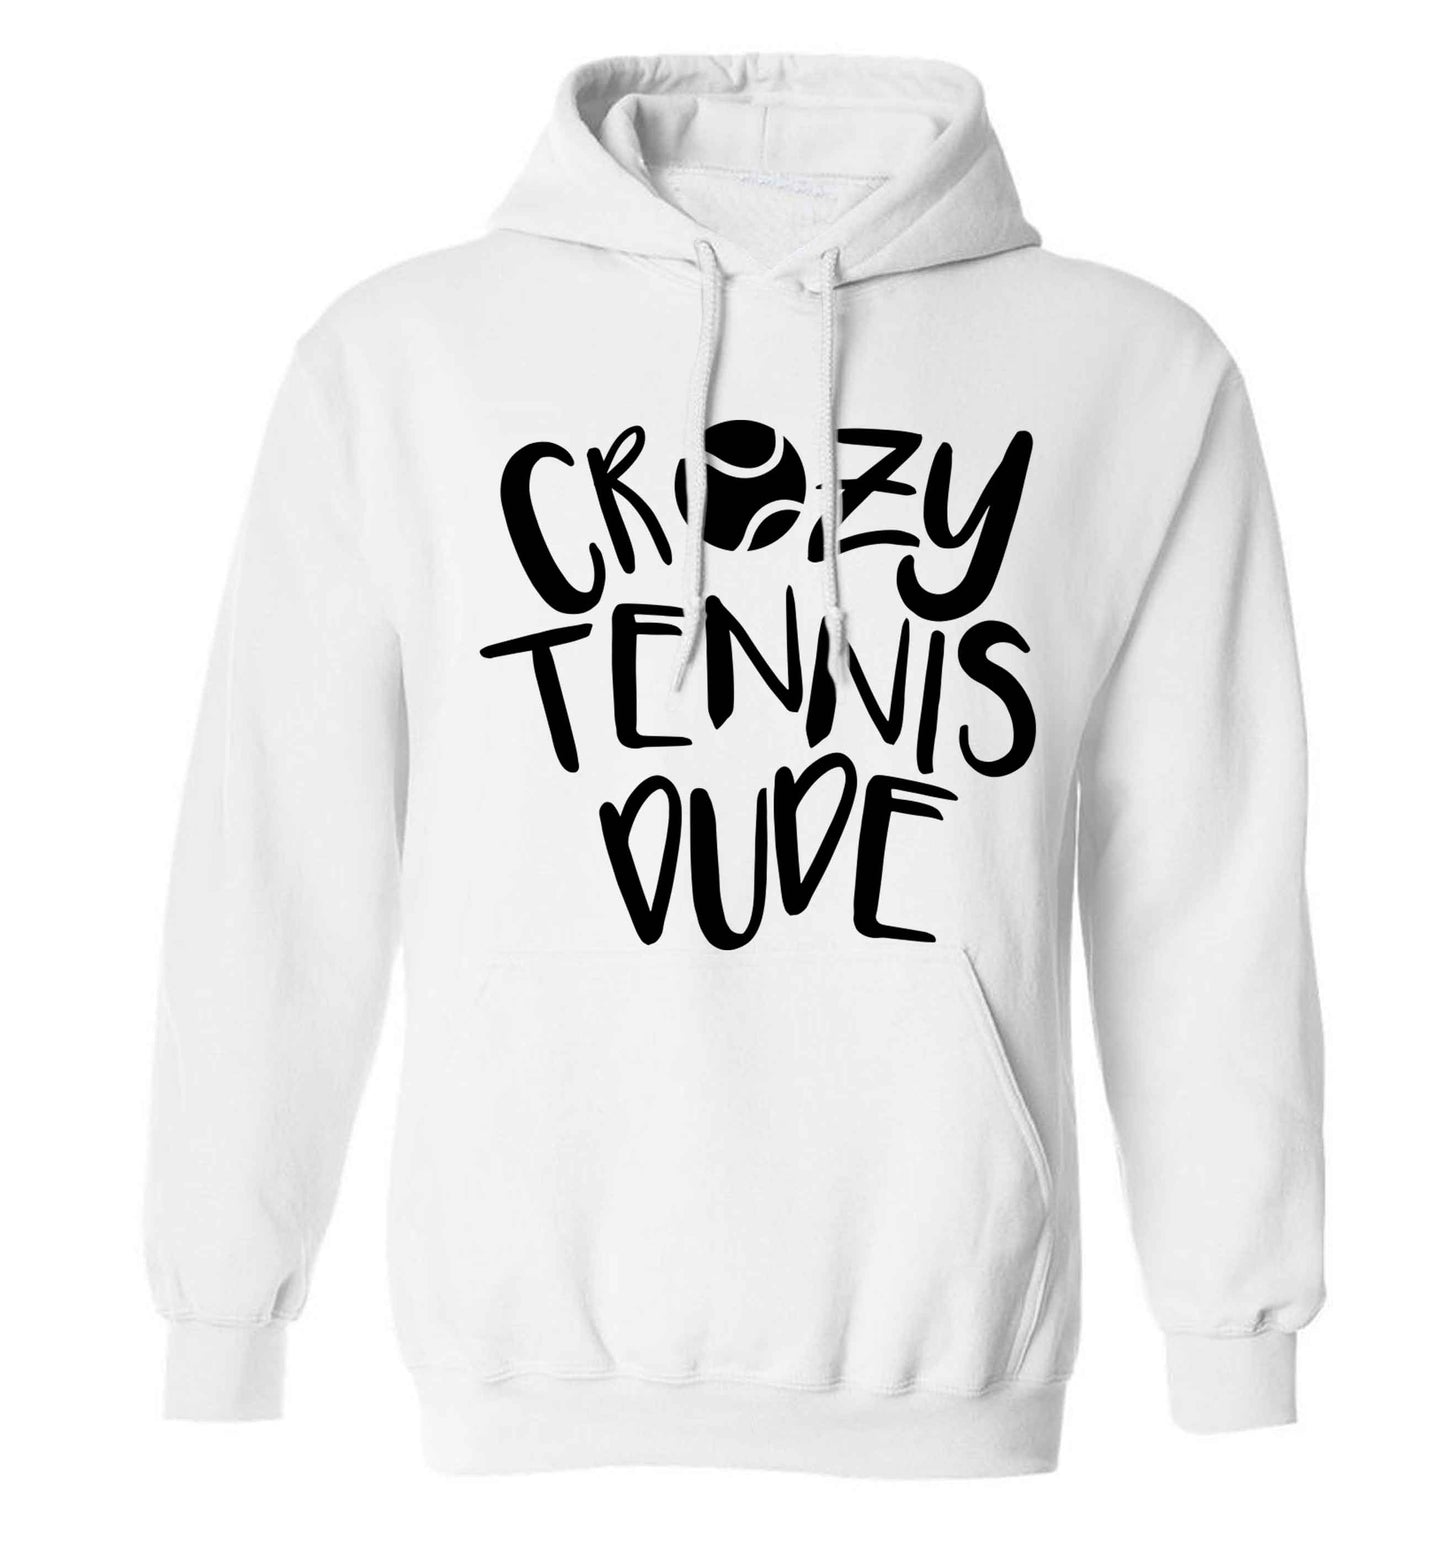 Crazy tennis dude adults unisex white hoodie 2XL